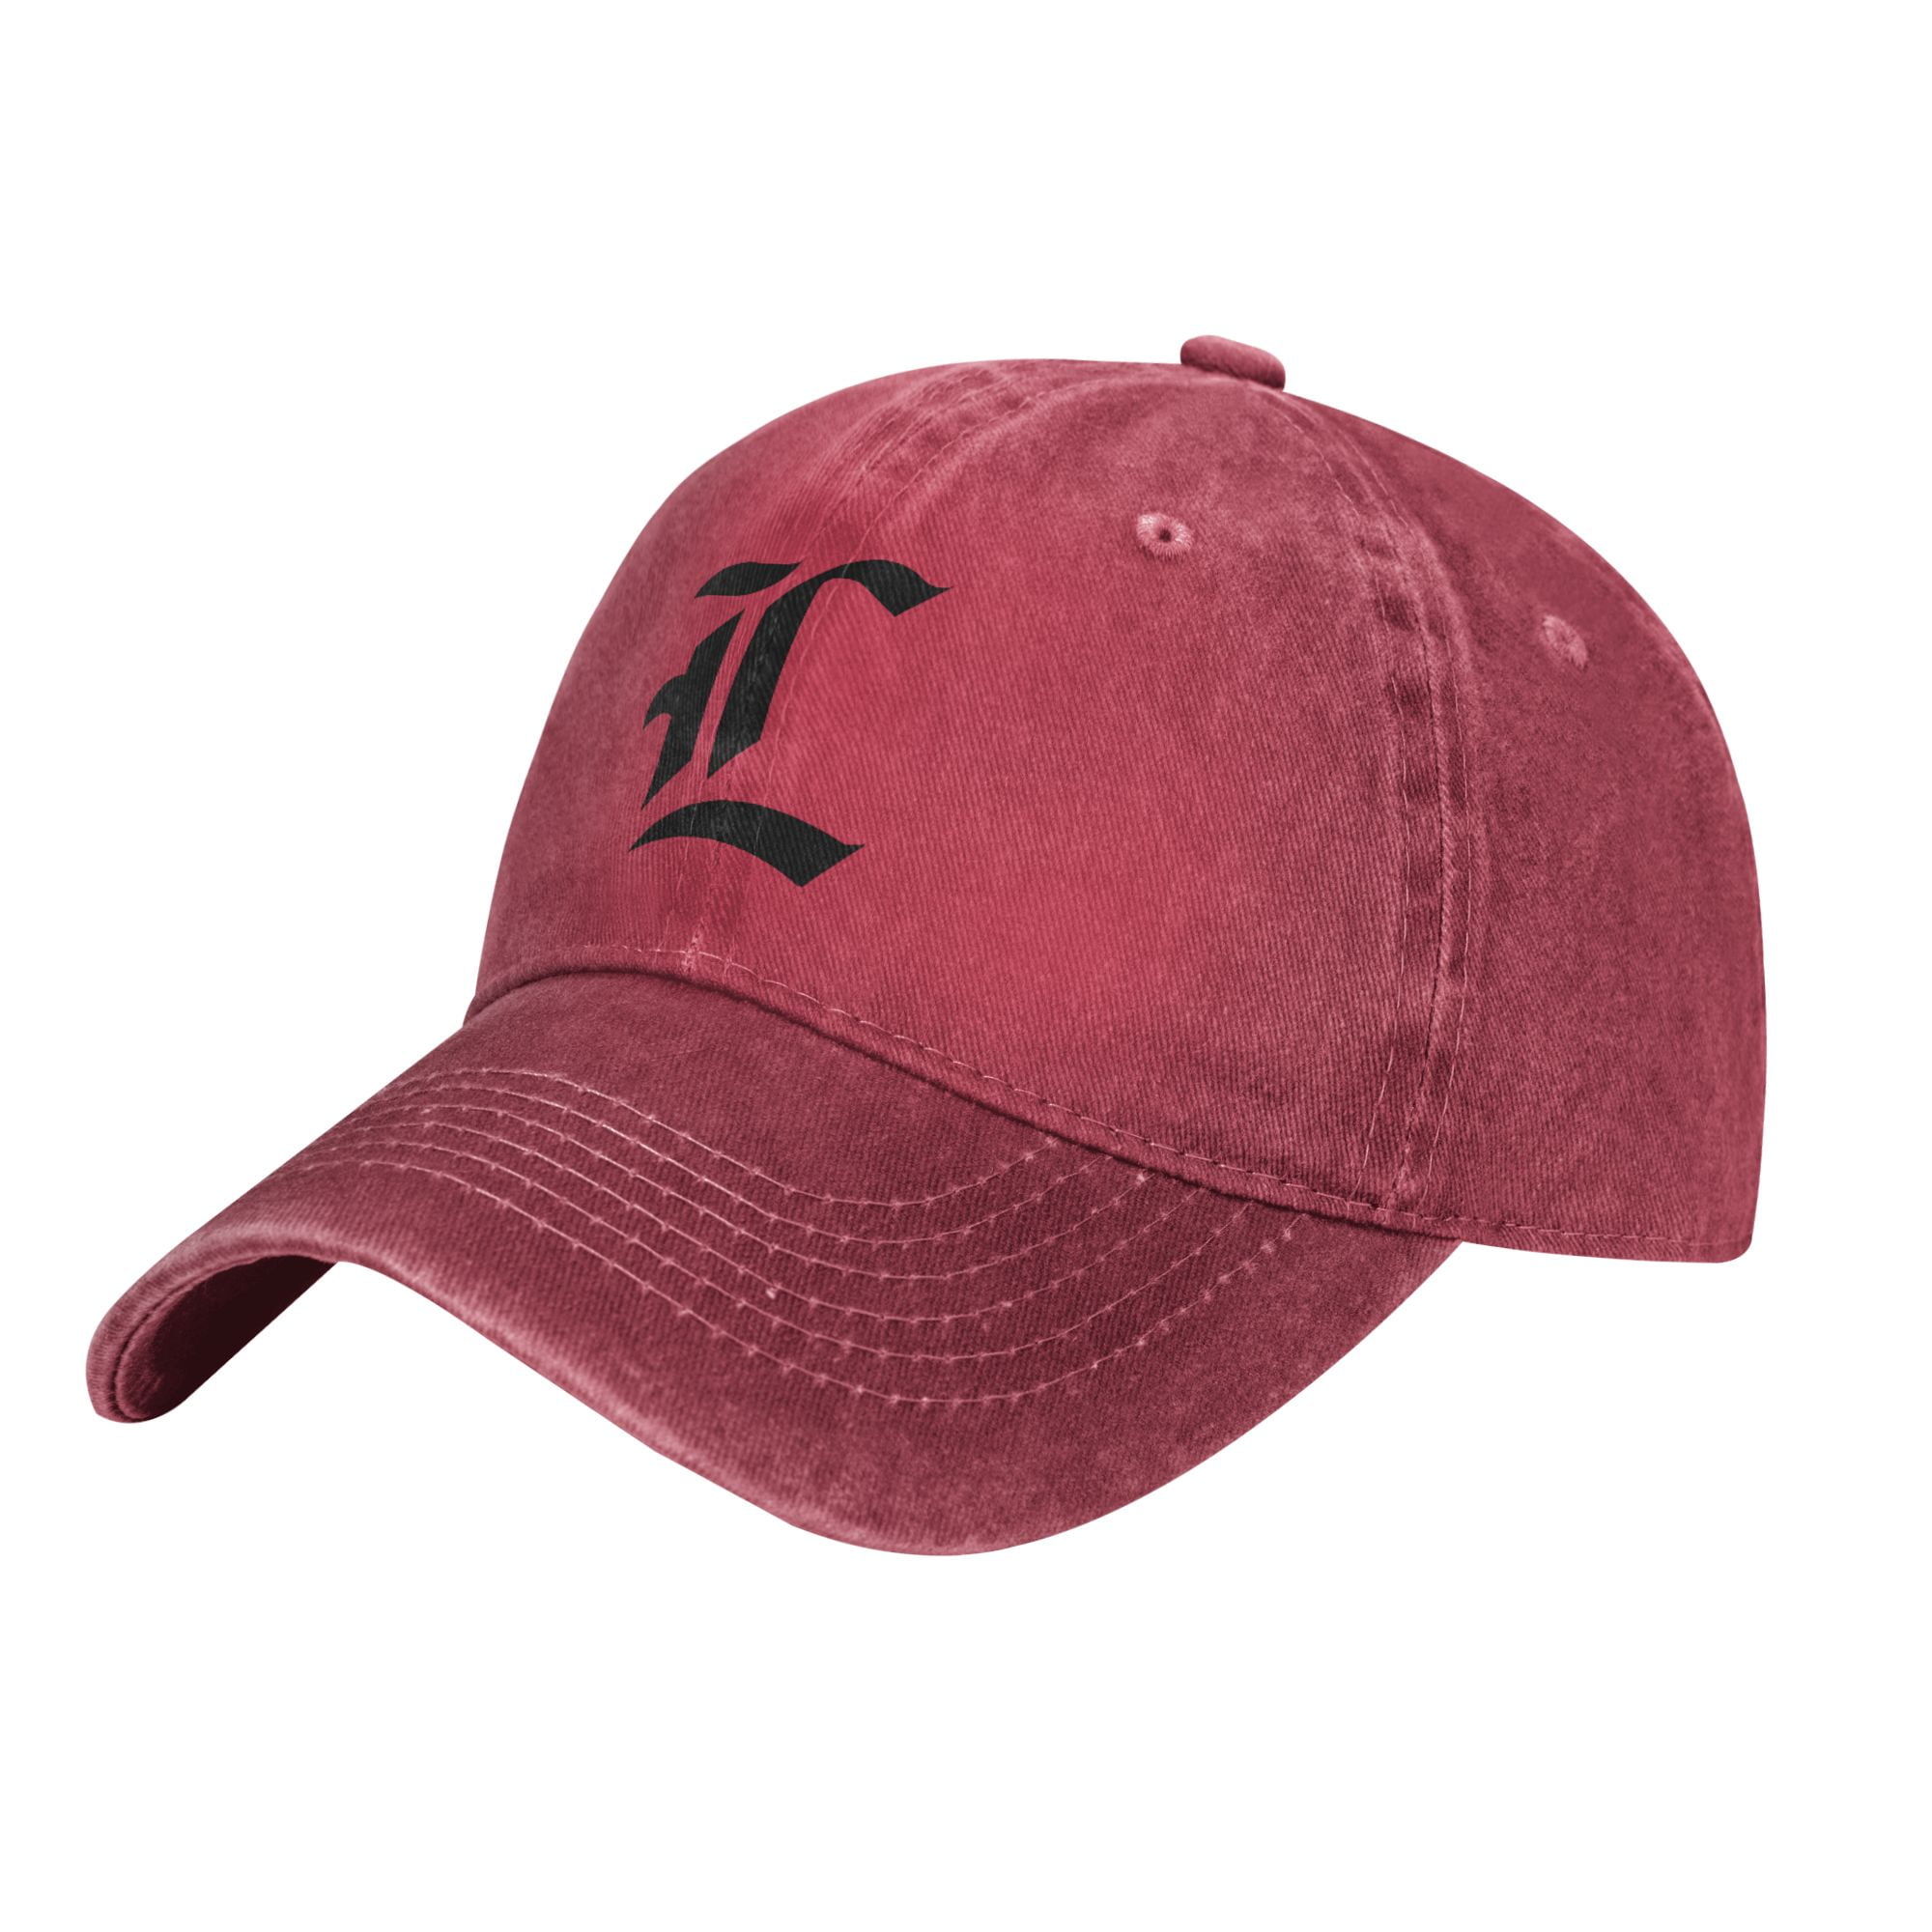 ZICANCN Mens Hats Unisex Baseball Caps-Gothic Letters Hats for Men